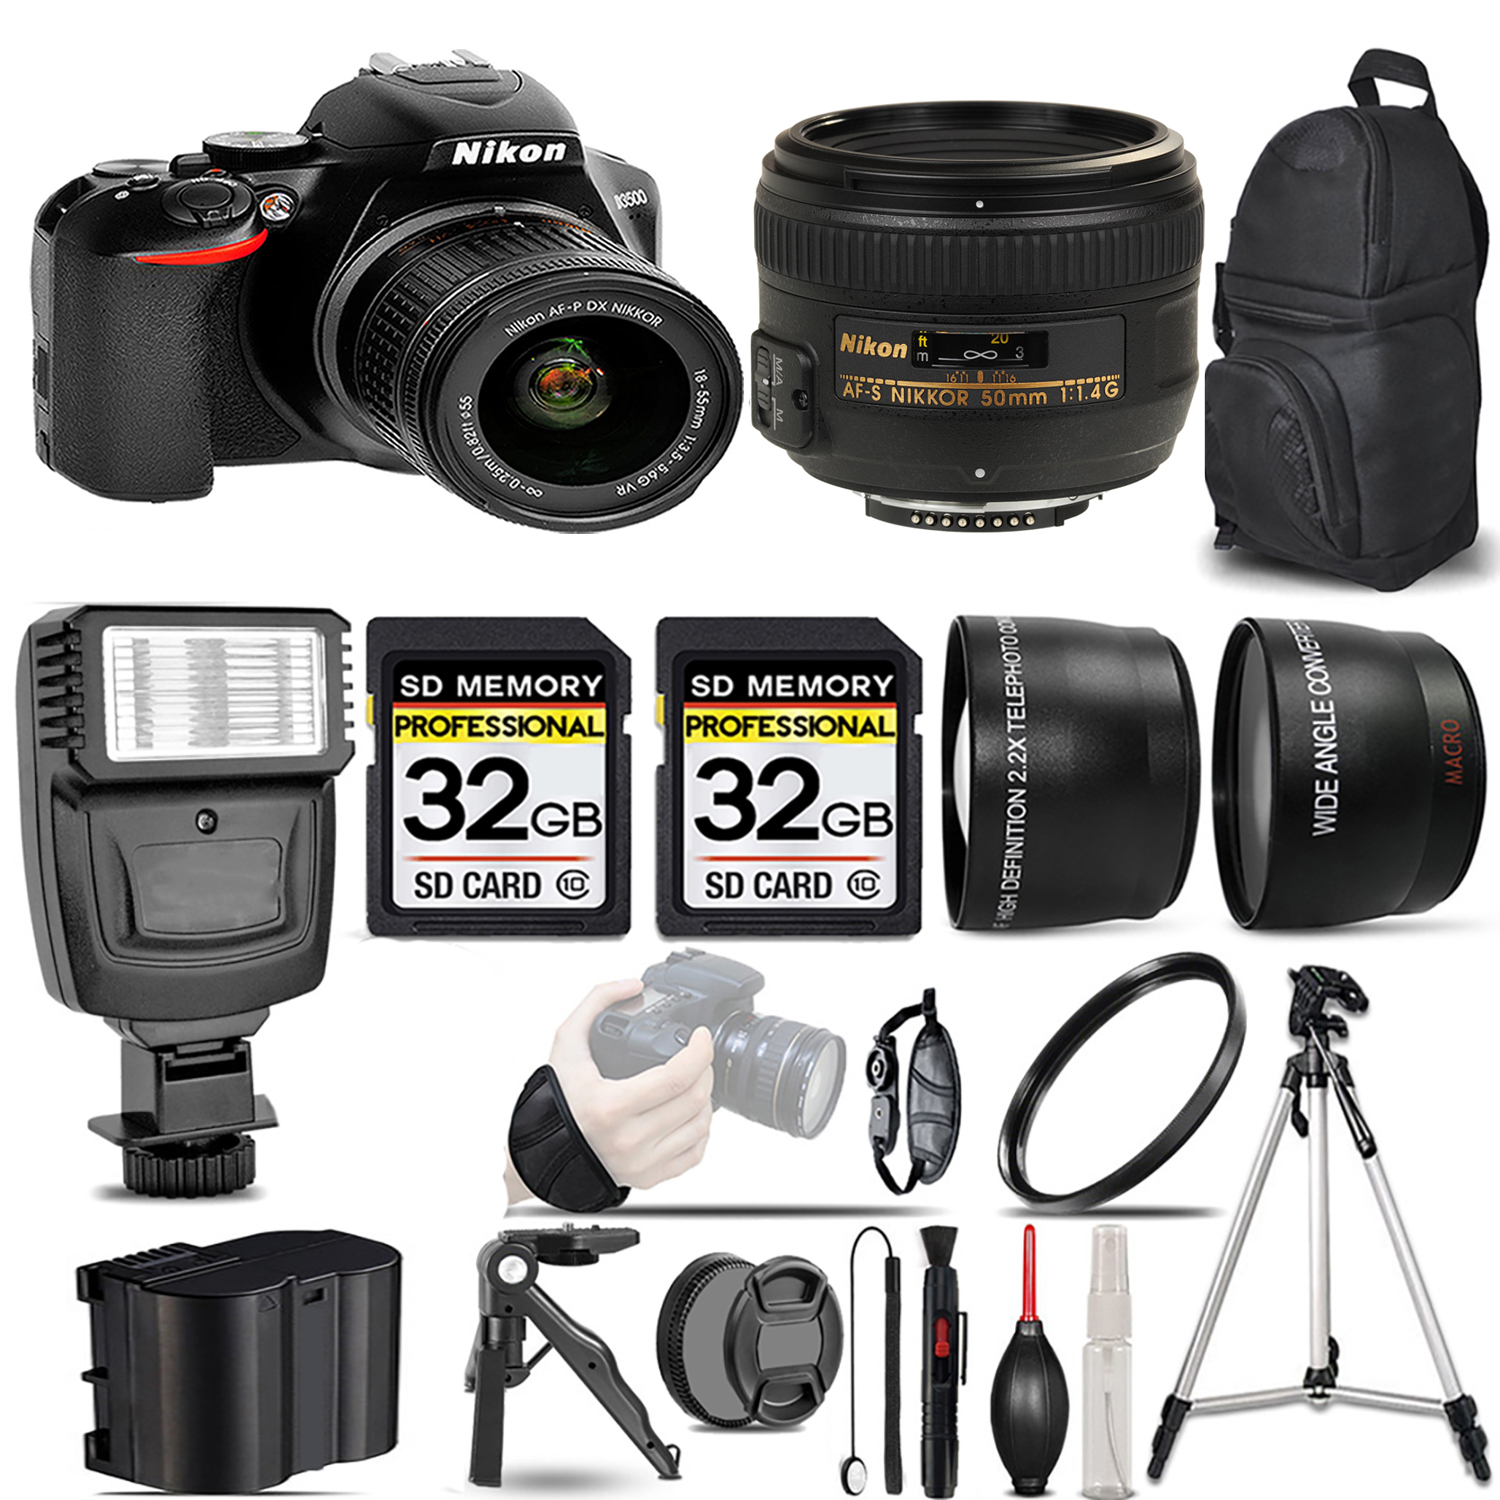 D3500 DSLR Camera with 18-55mm Lens + 50mm f/1.4G Lens + Flash + 64GB -  Kit *FREE SHIPPING*